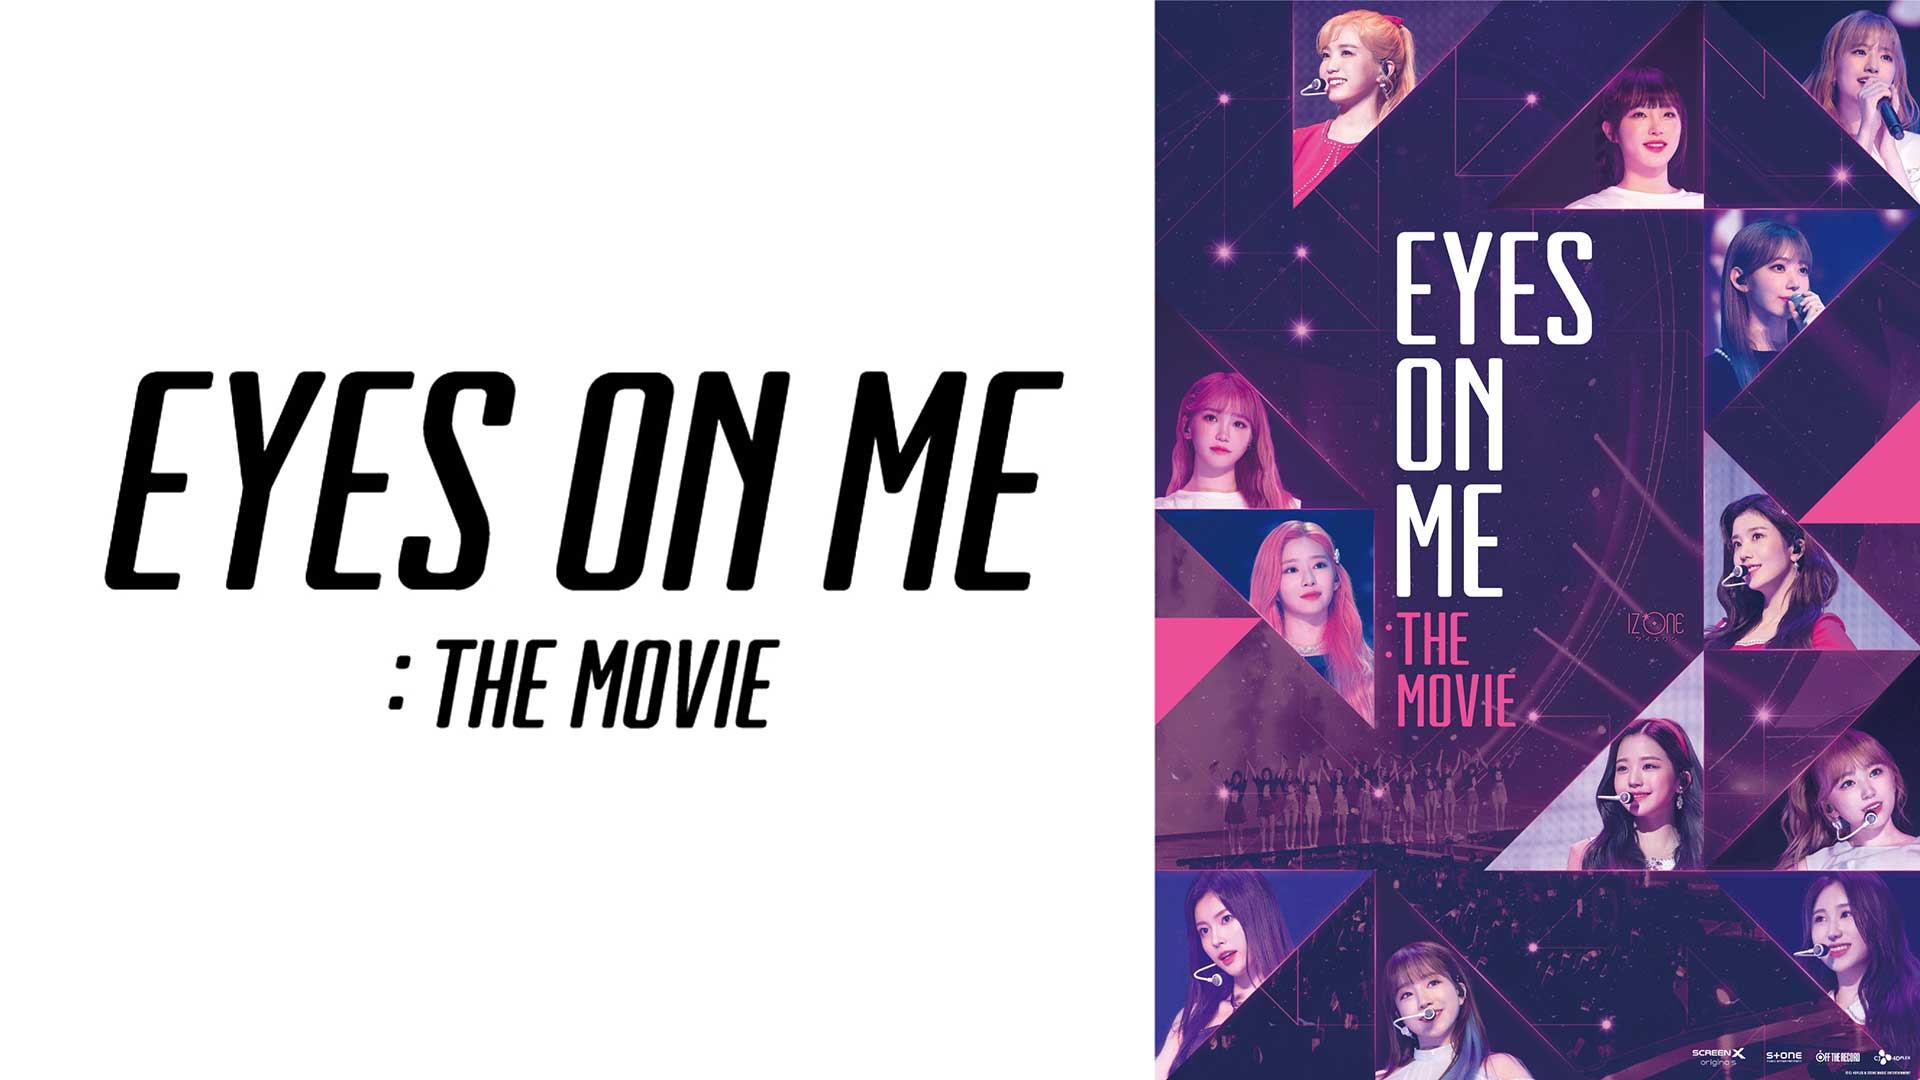 Eyes On Me The Movie Mbs動画イズム